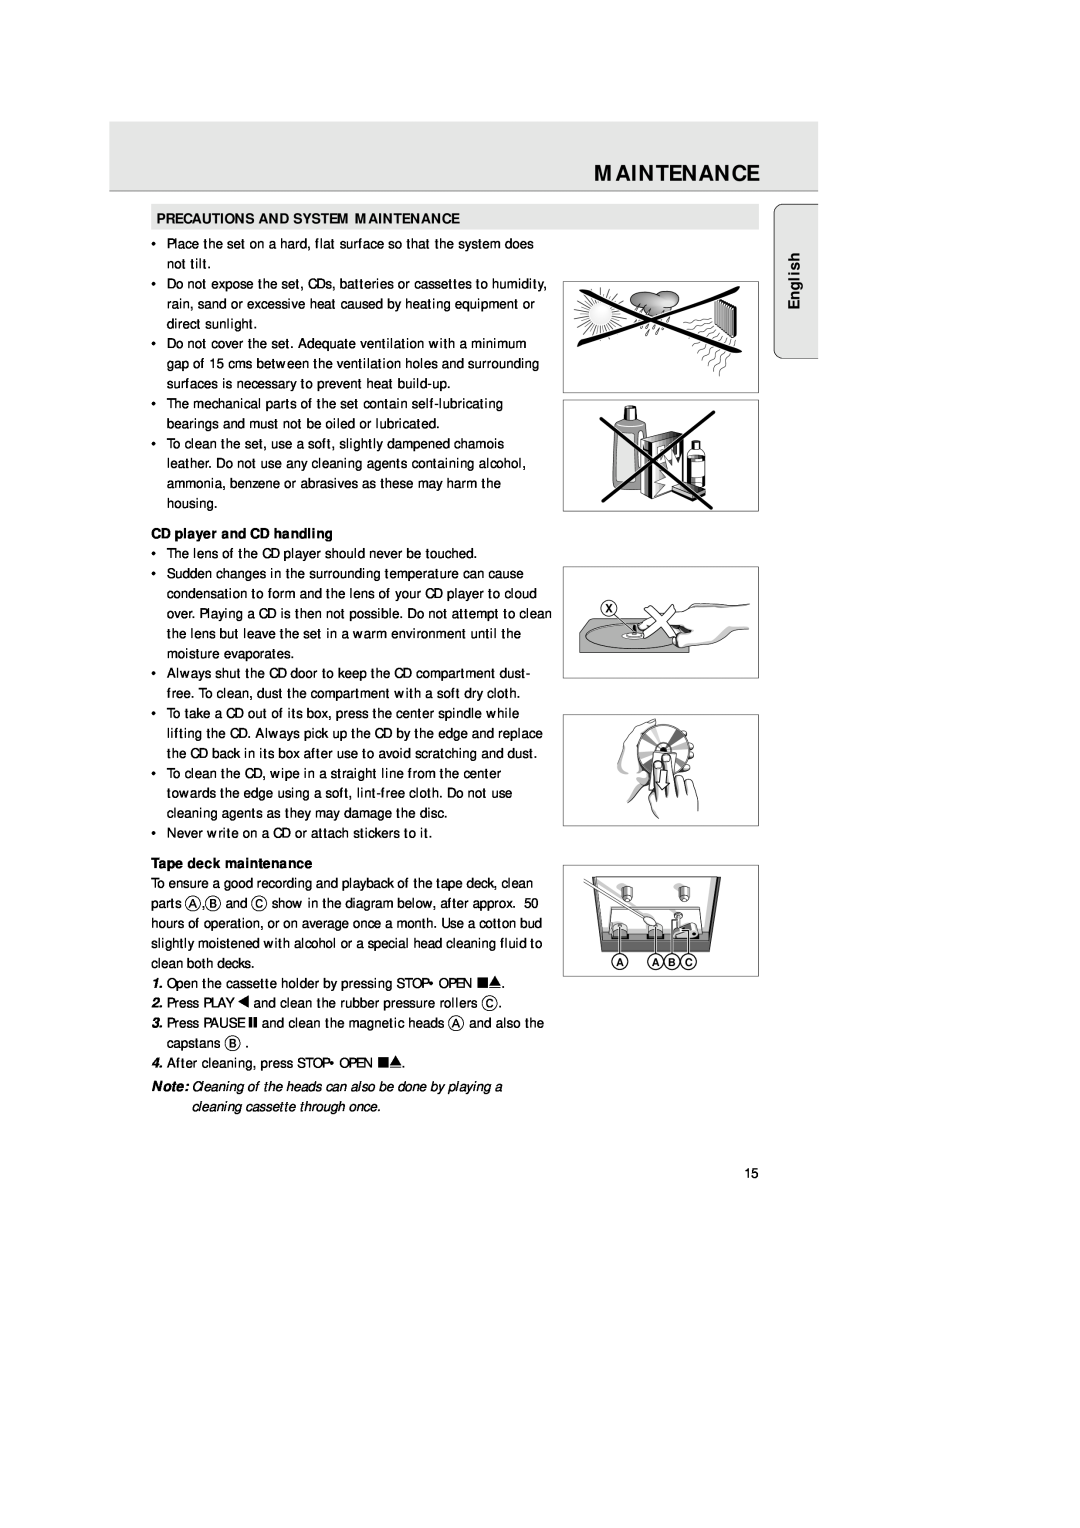 Philips AZ 1025 manual English, Precautions And System Maintenance, CD player and CD handling, Tape deck maintenance 